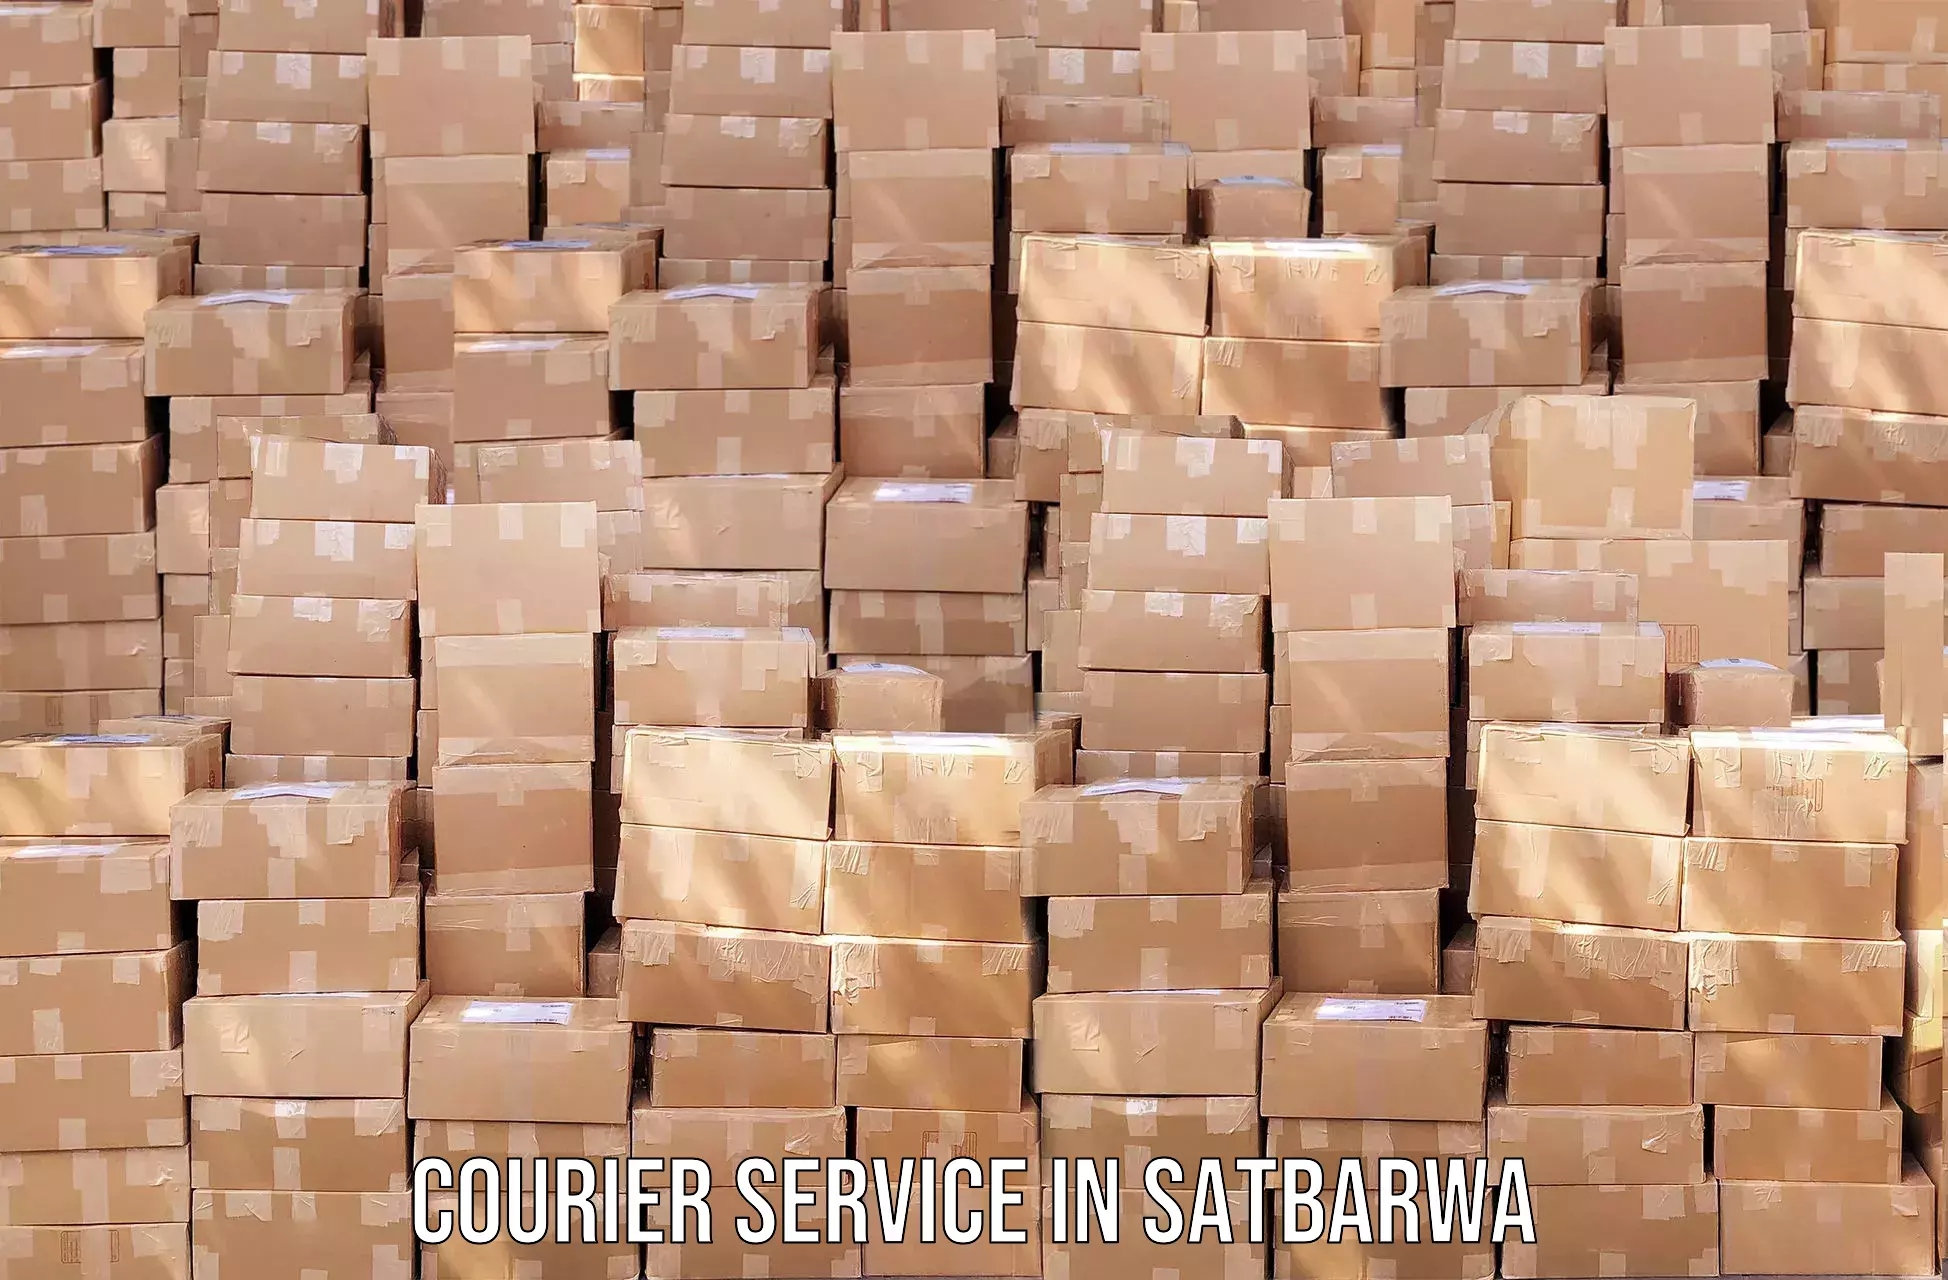 Express postal services in Satbarwa